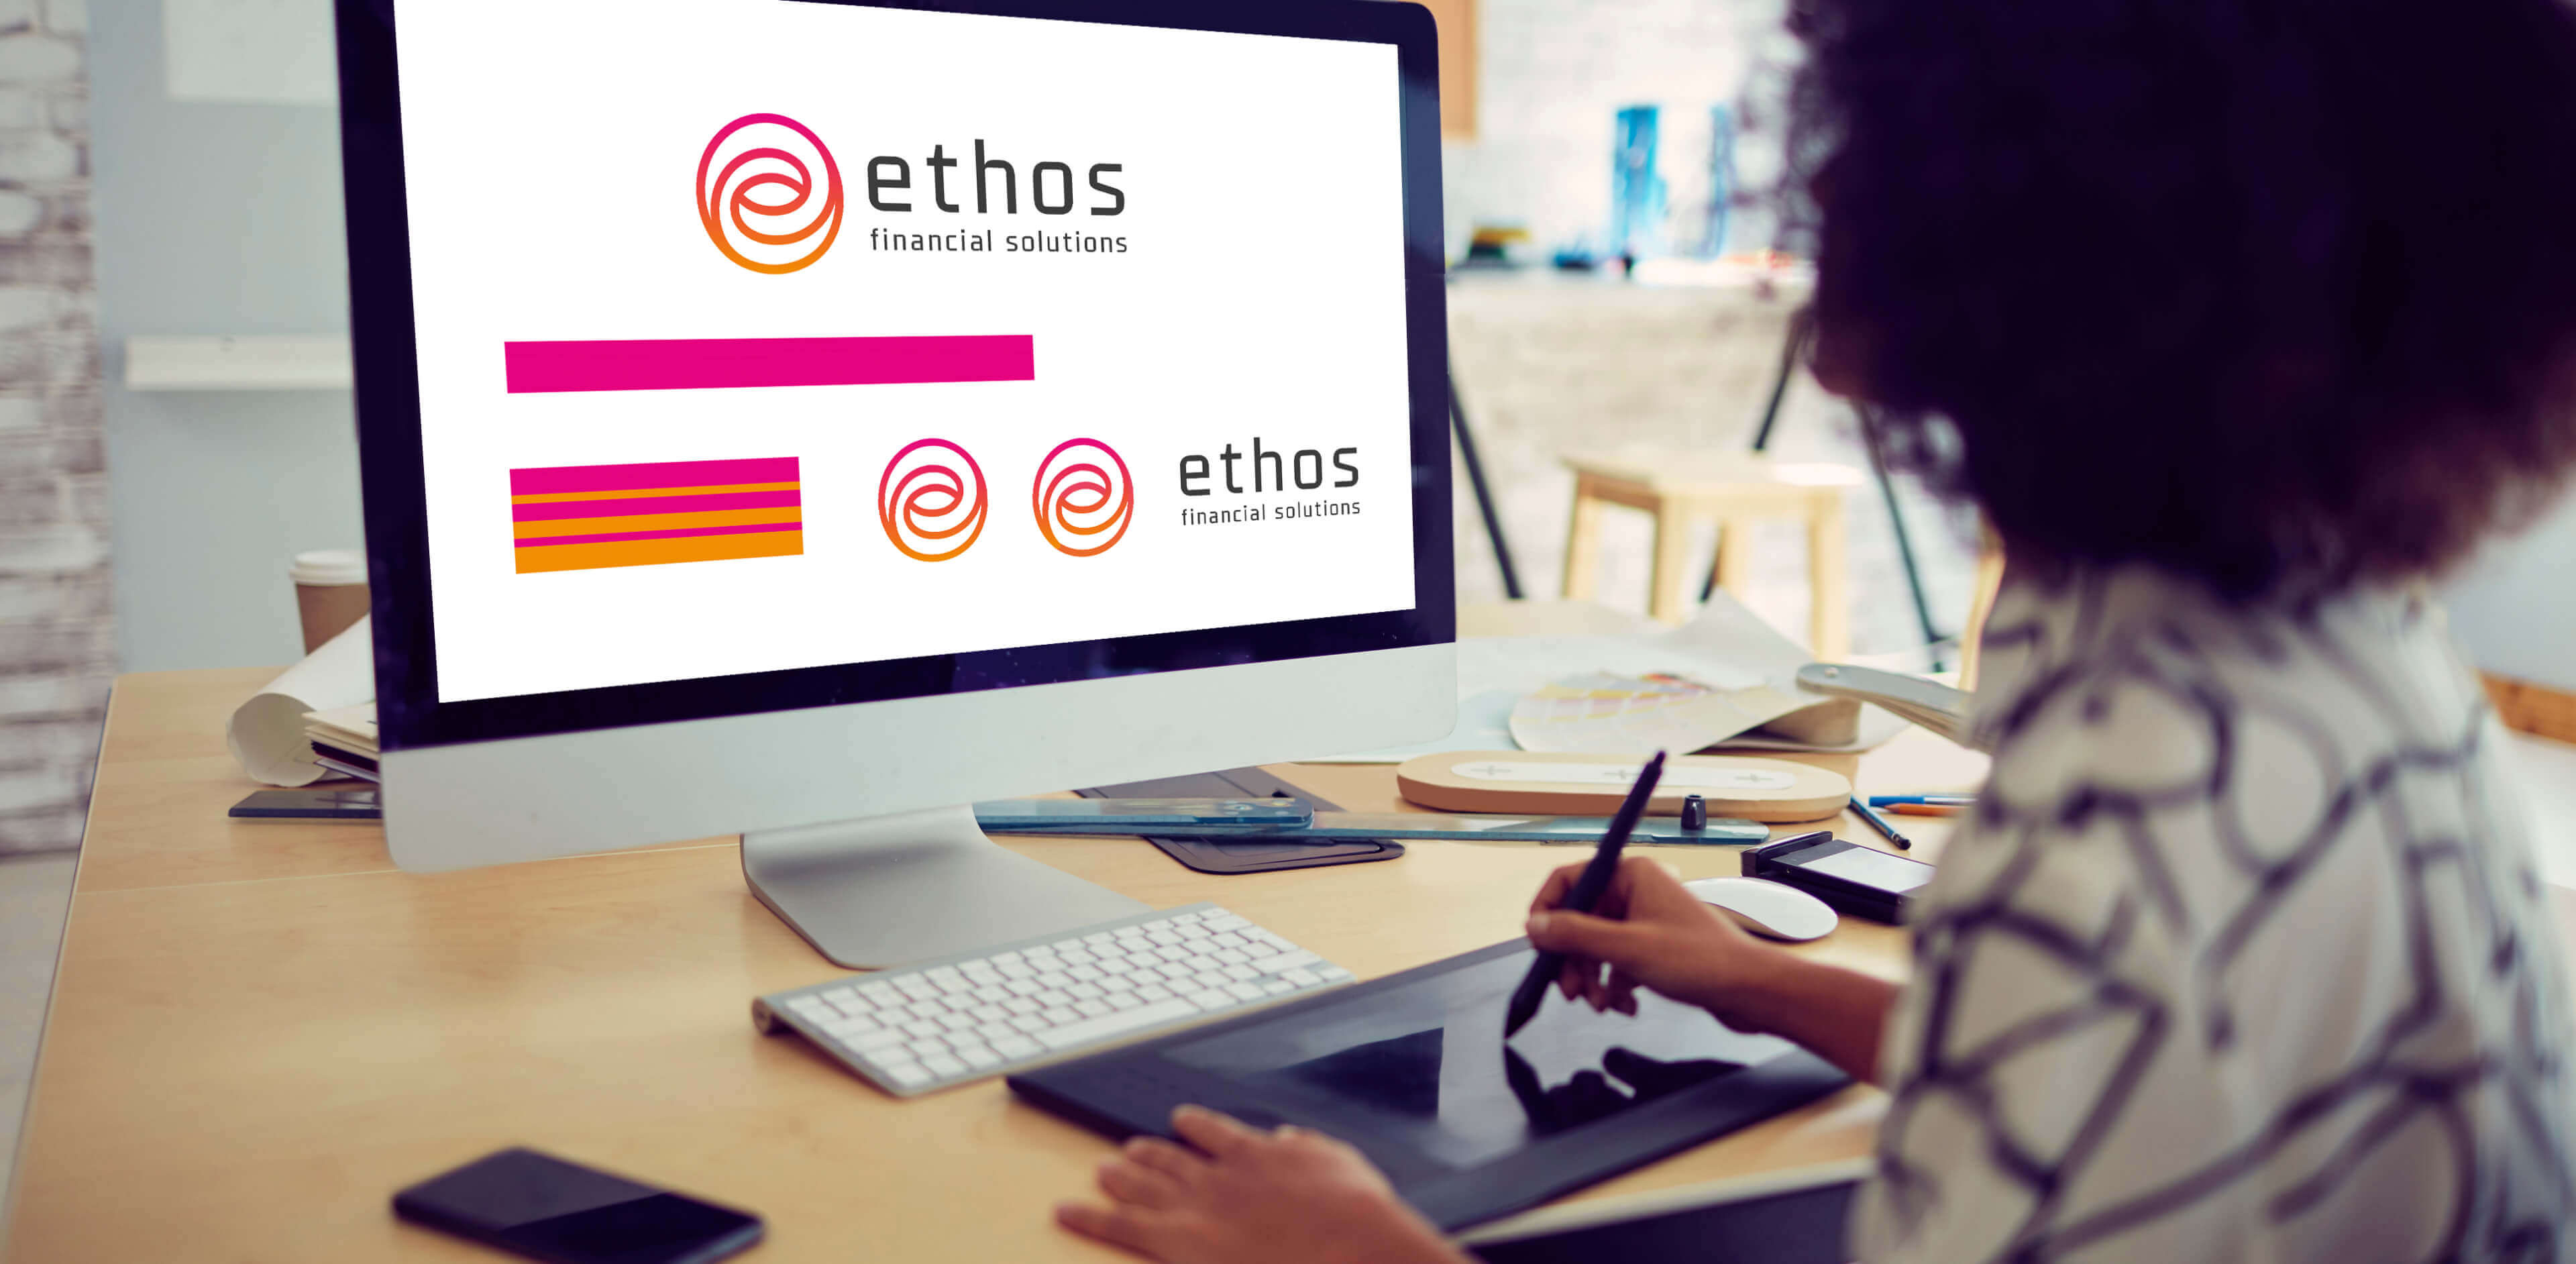 Ethos Logo design ideas on a laptop